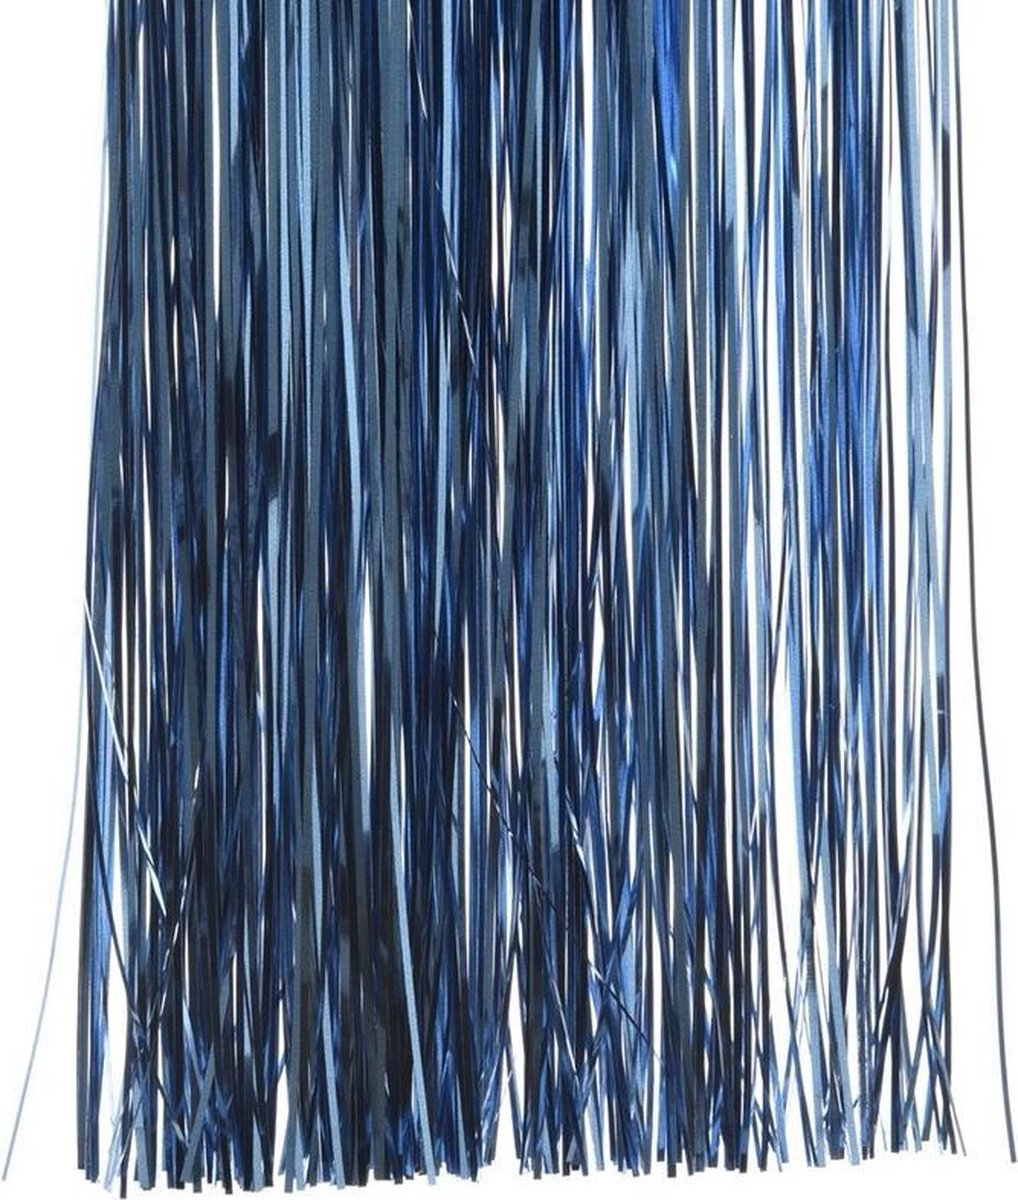 8x Blauwe kerstversiering folie slierten 50 cm